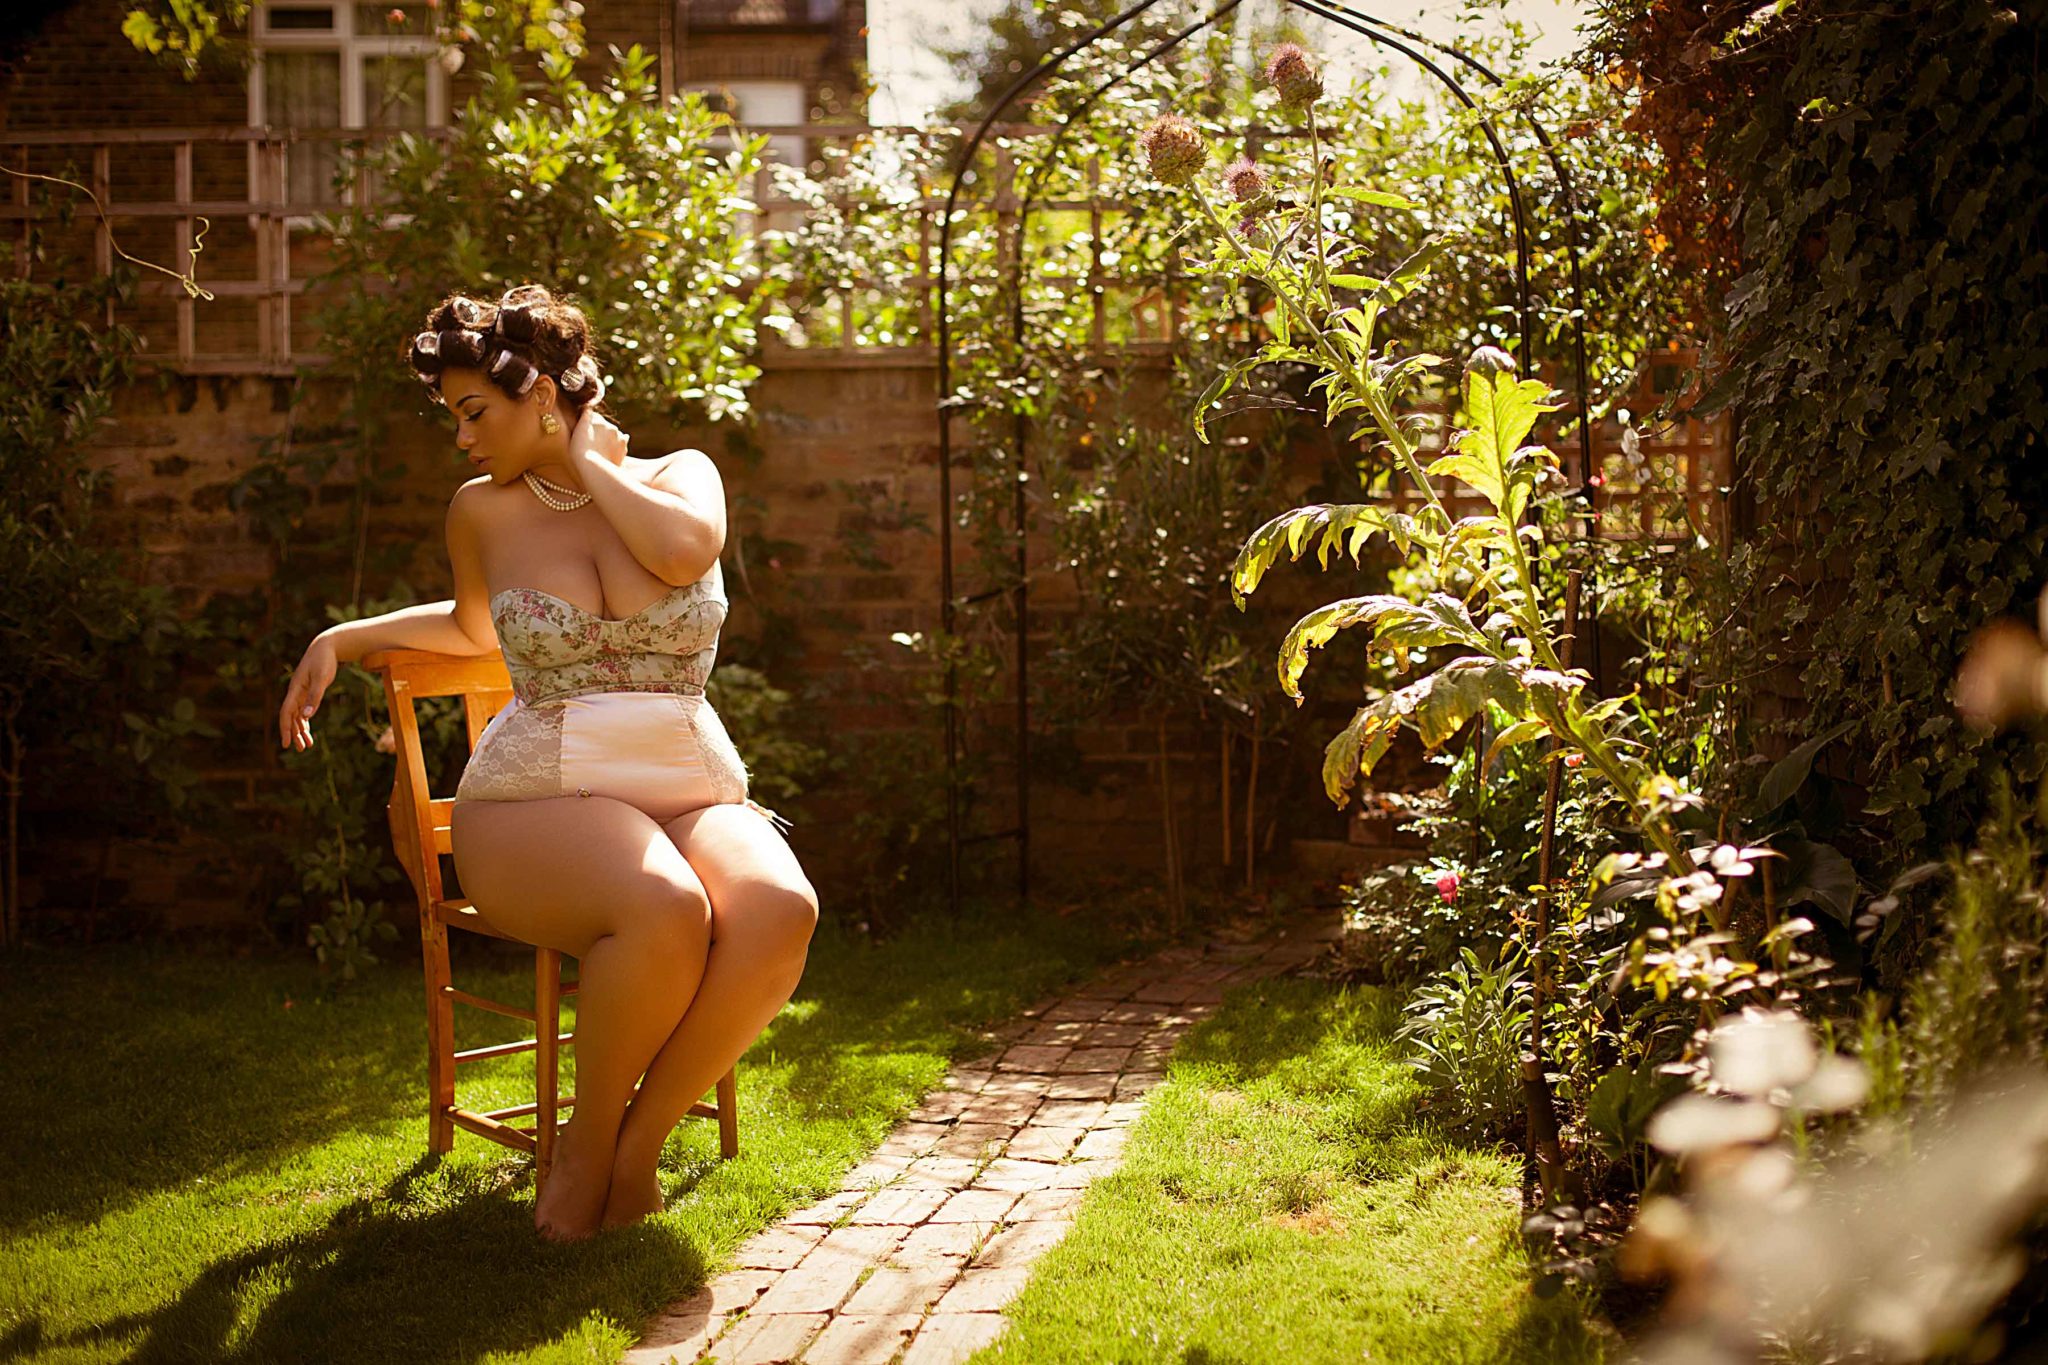 outdoor boudoir photography poses